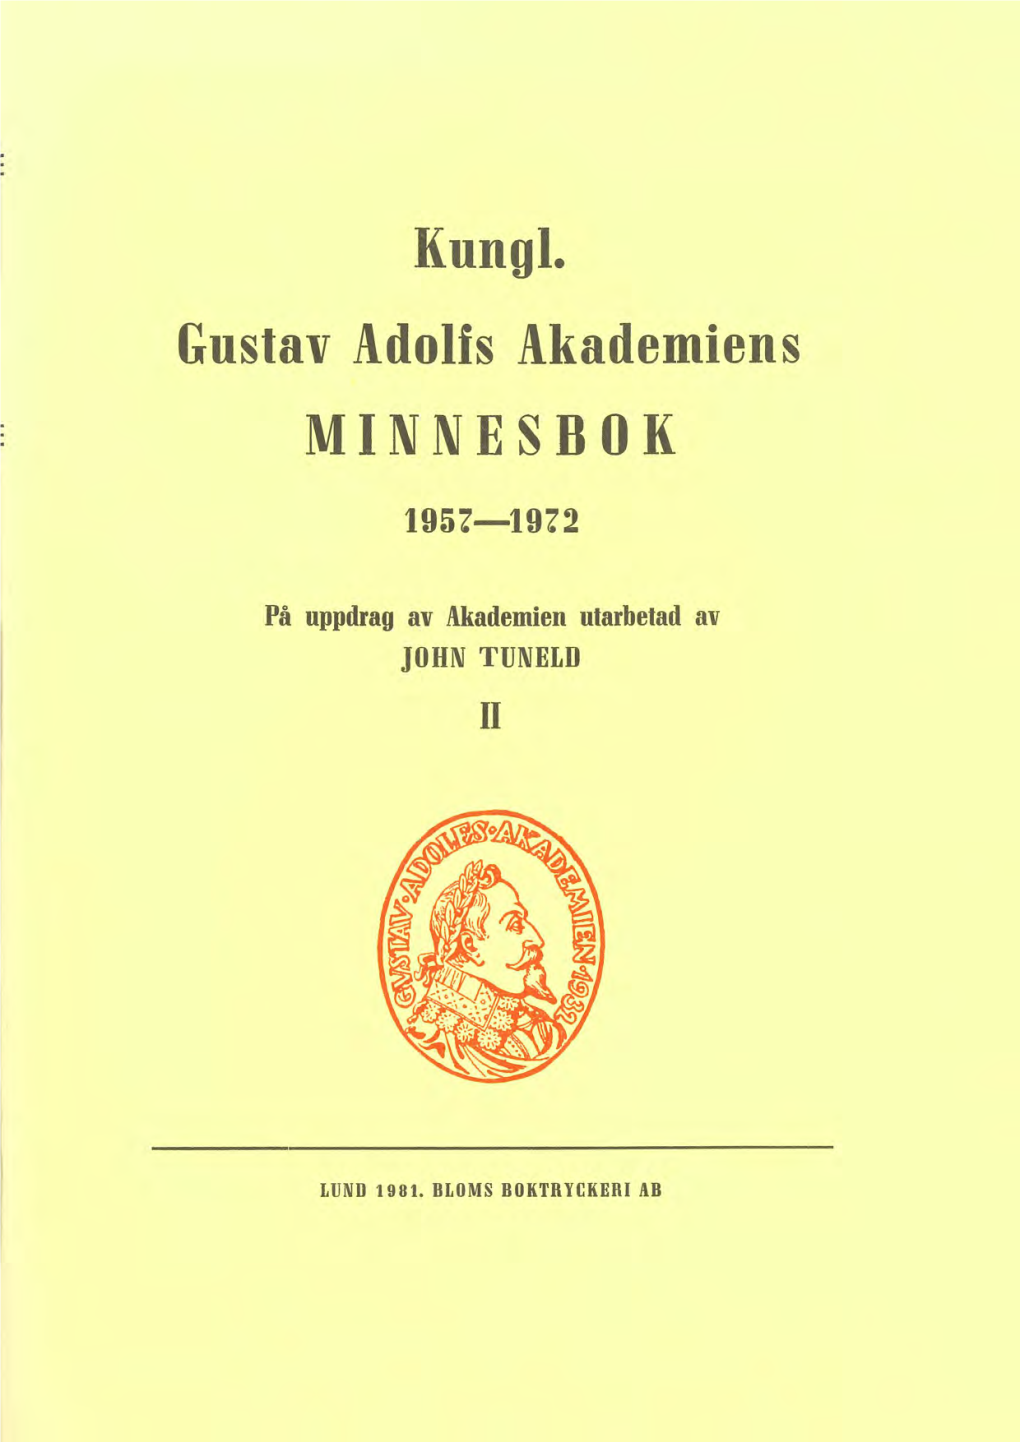 Kungl. Gustav Adolfs Akademiens MINNESBOI( 1957-1972